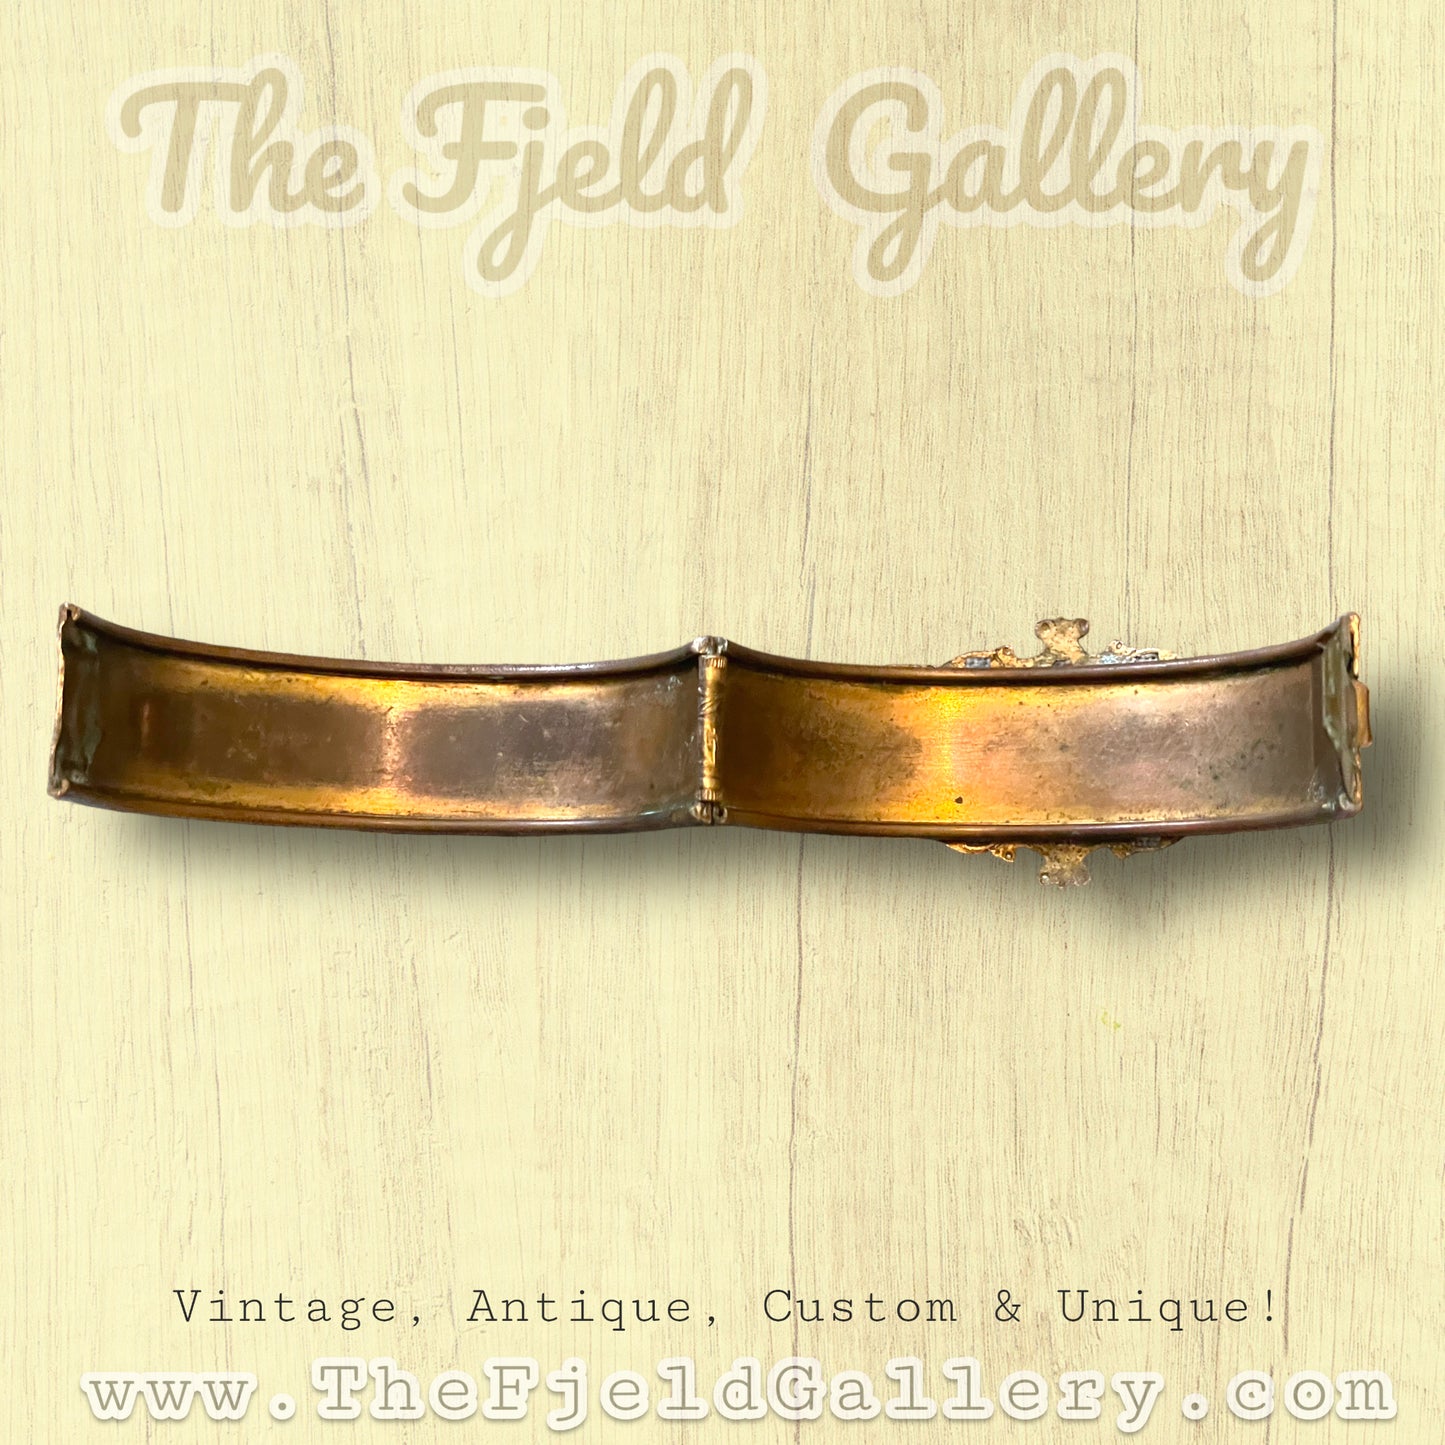 Vintage Brass Filigree Hinged Bangle Bracelet with Coral Celluloid Rose